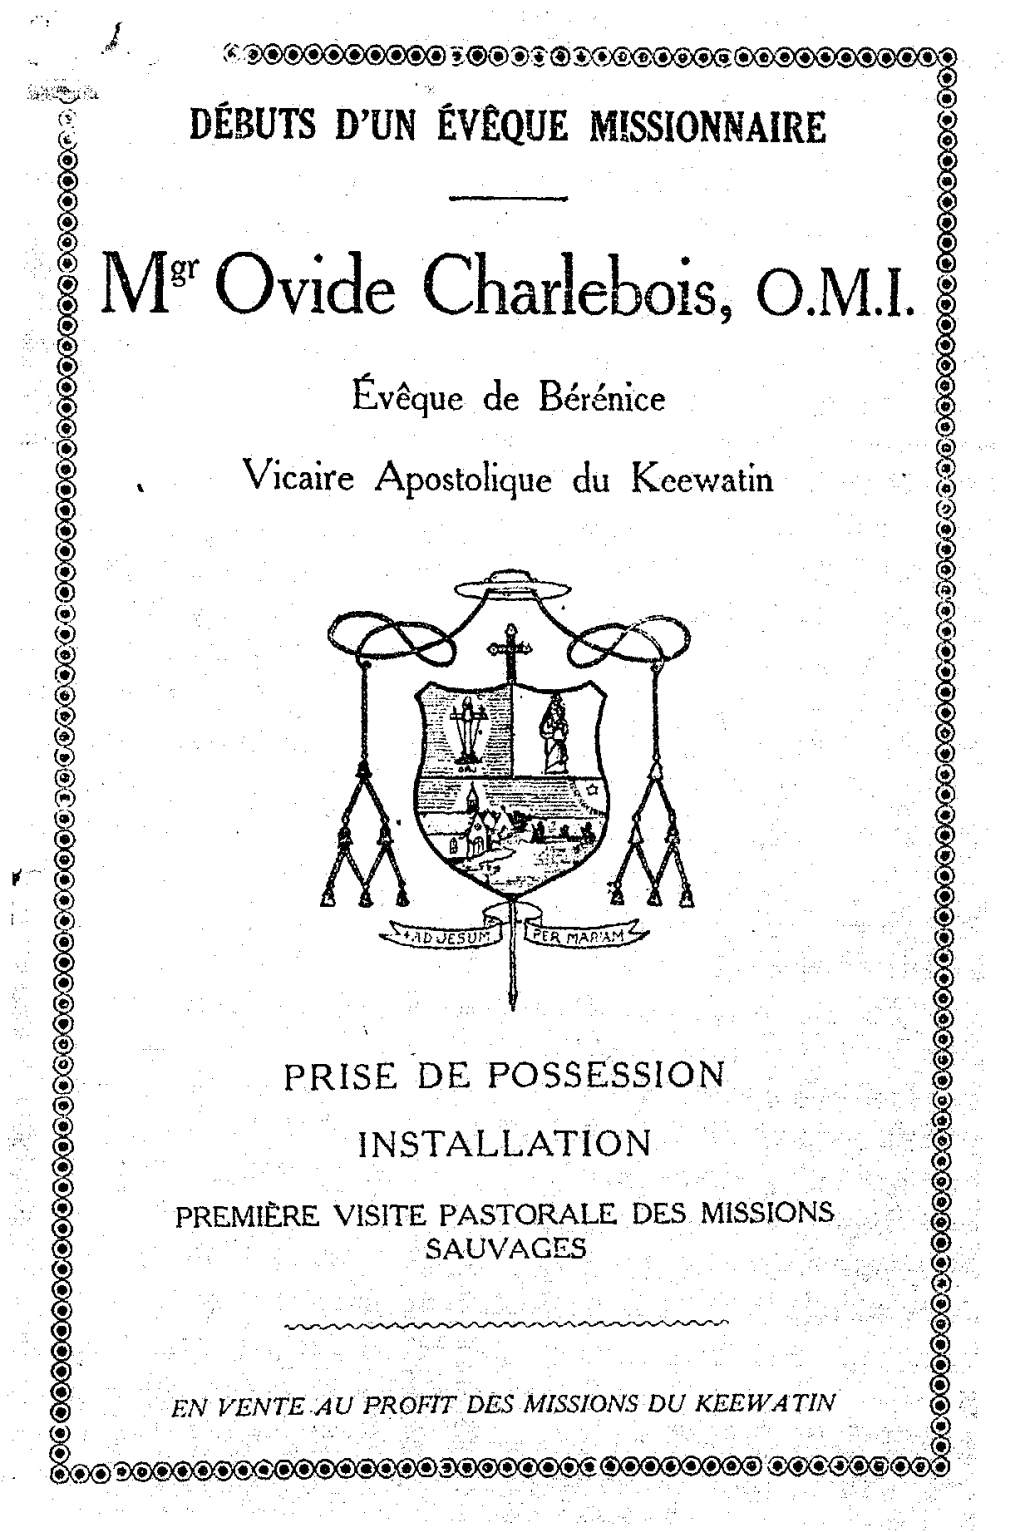 Mg R Ovide Charlebois, O.M.I